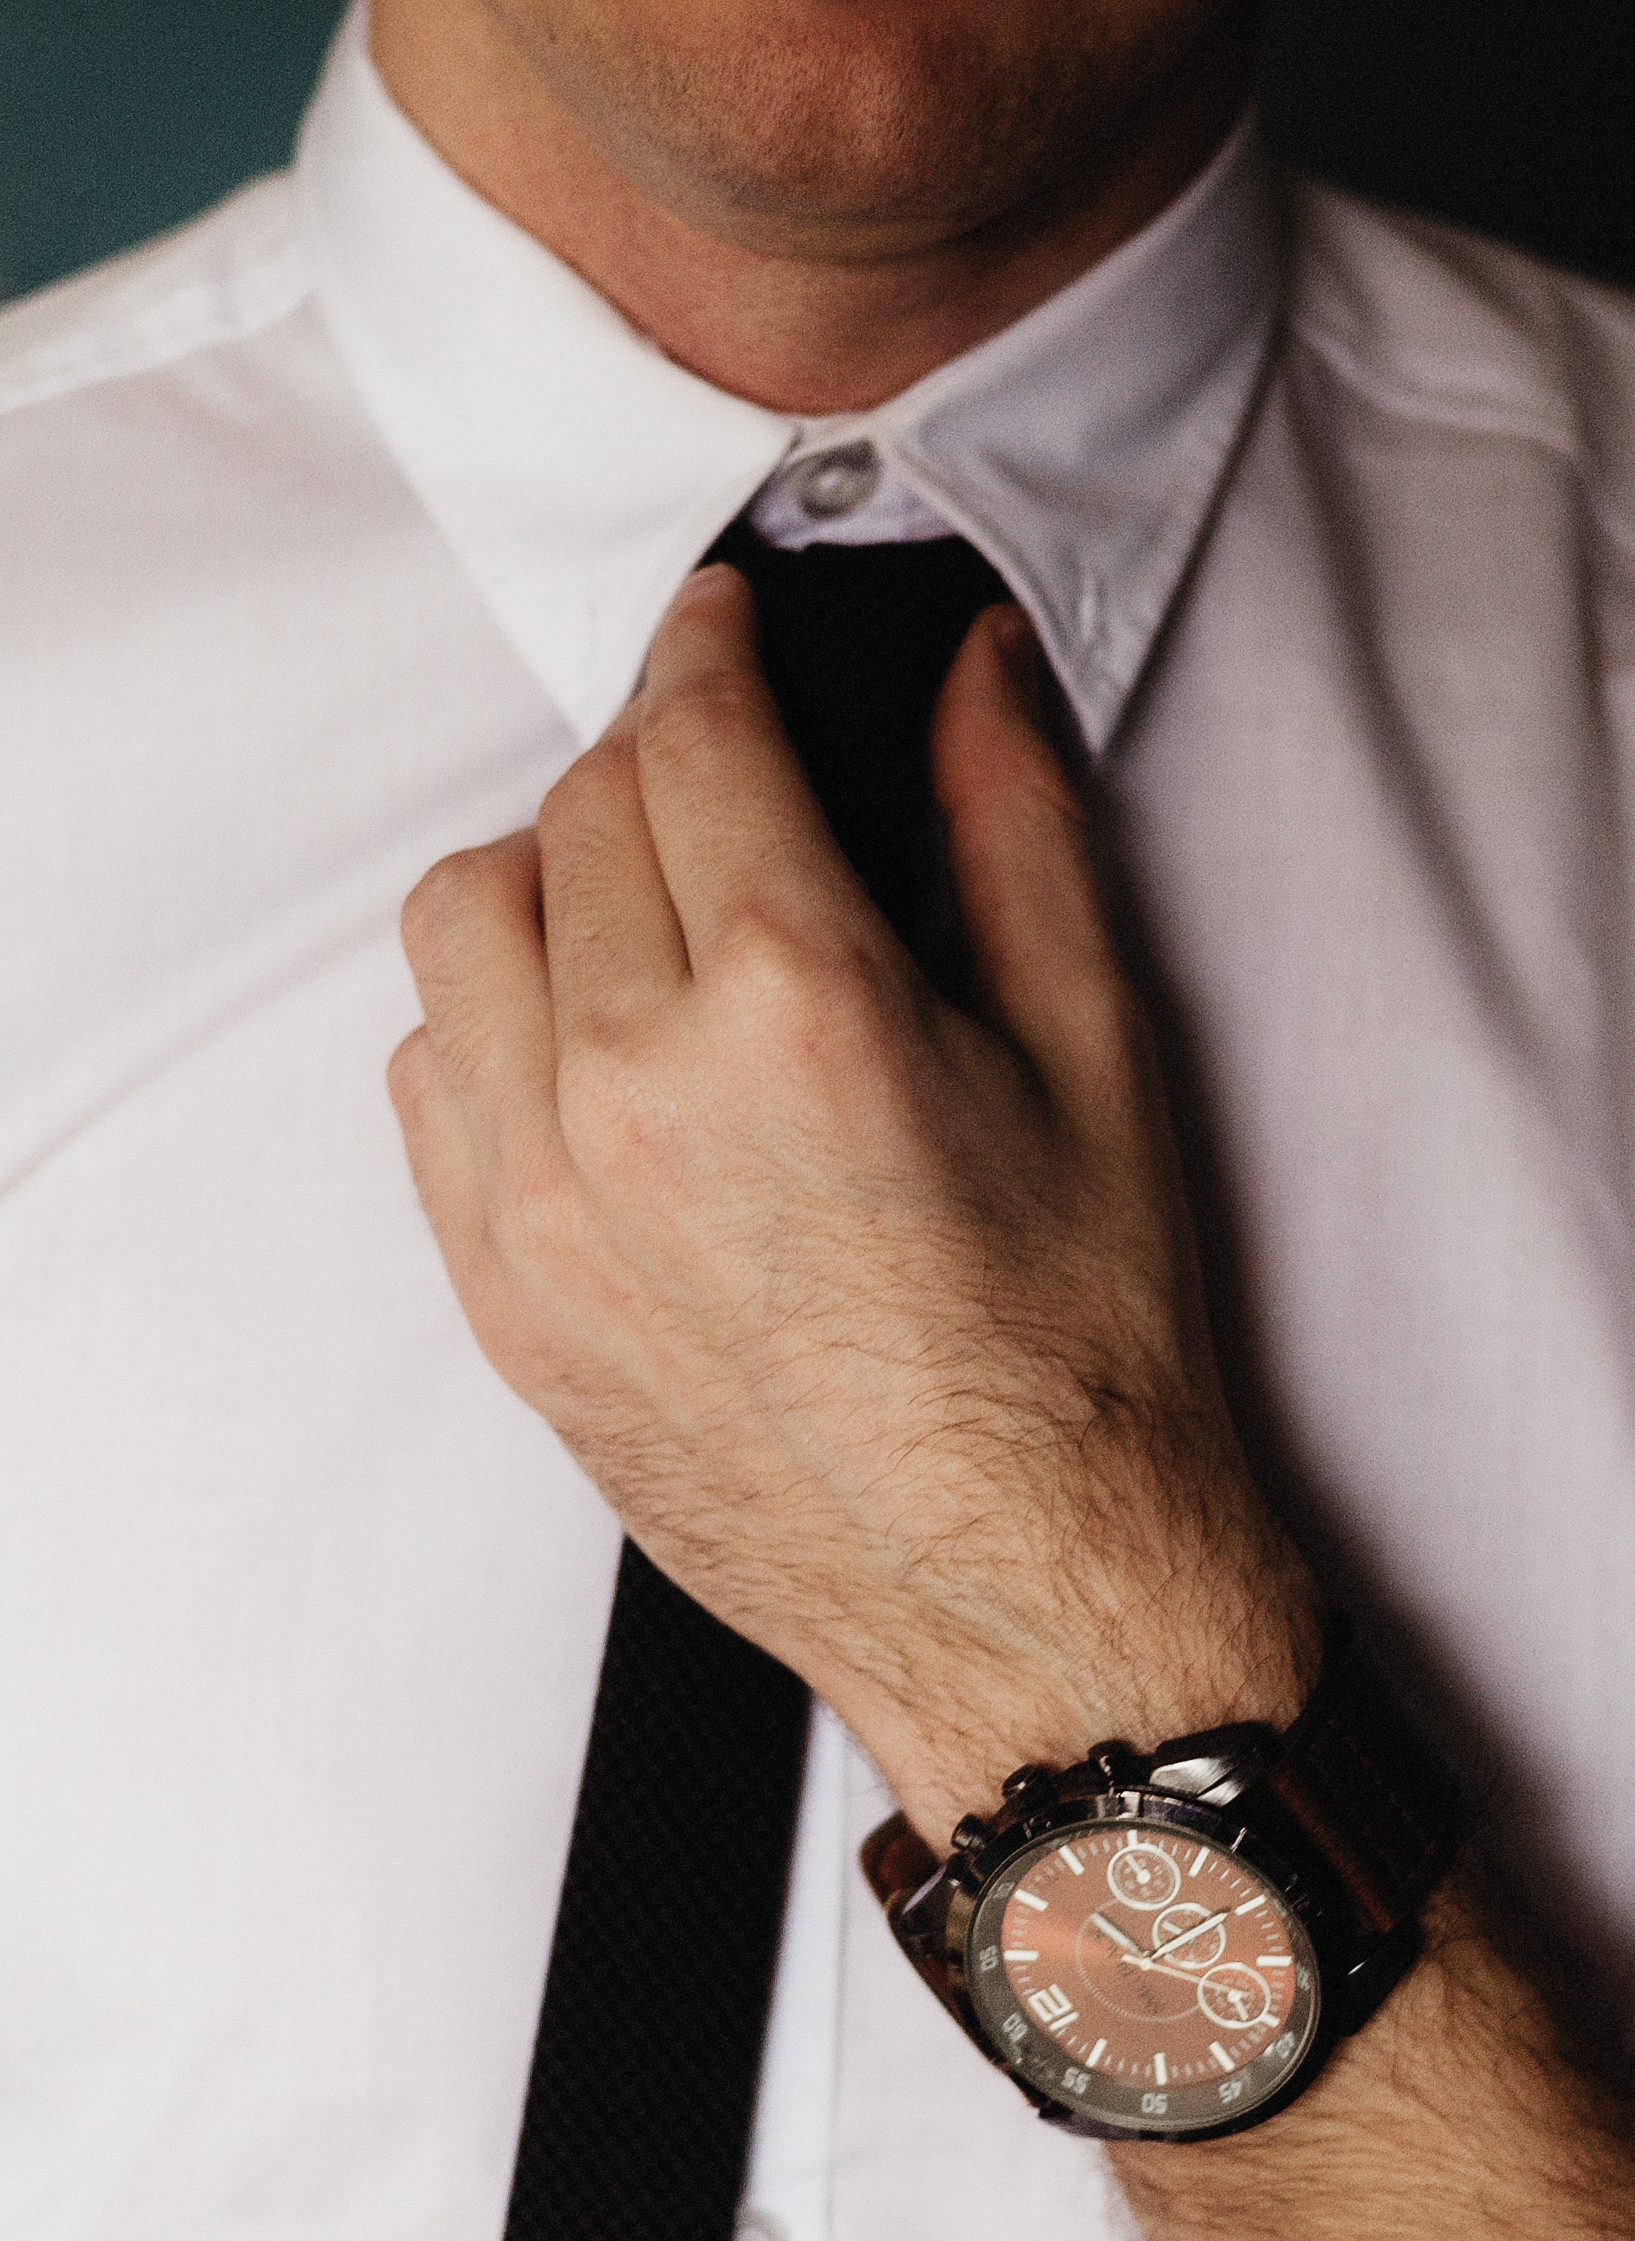 Free Images : tie, man, watch, creative, photography, stock, necktie ...